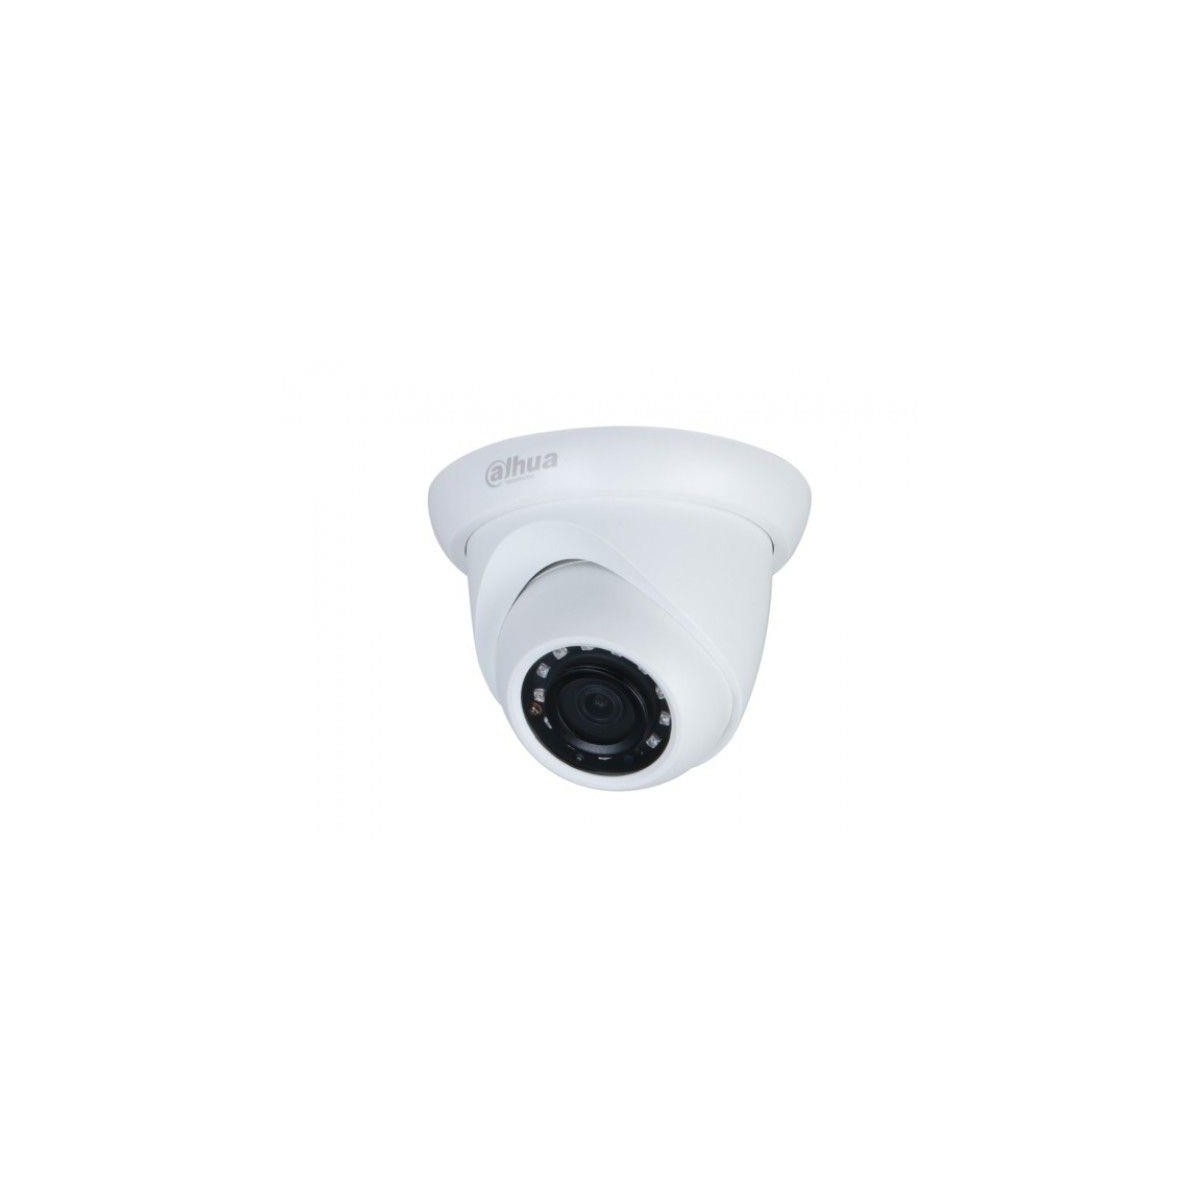 Dahua Europe Lite IPC-HDW1431S IP security camera Dome Ceiling/Wall/Pole